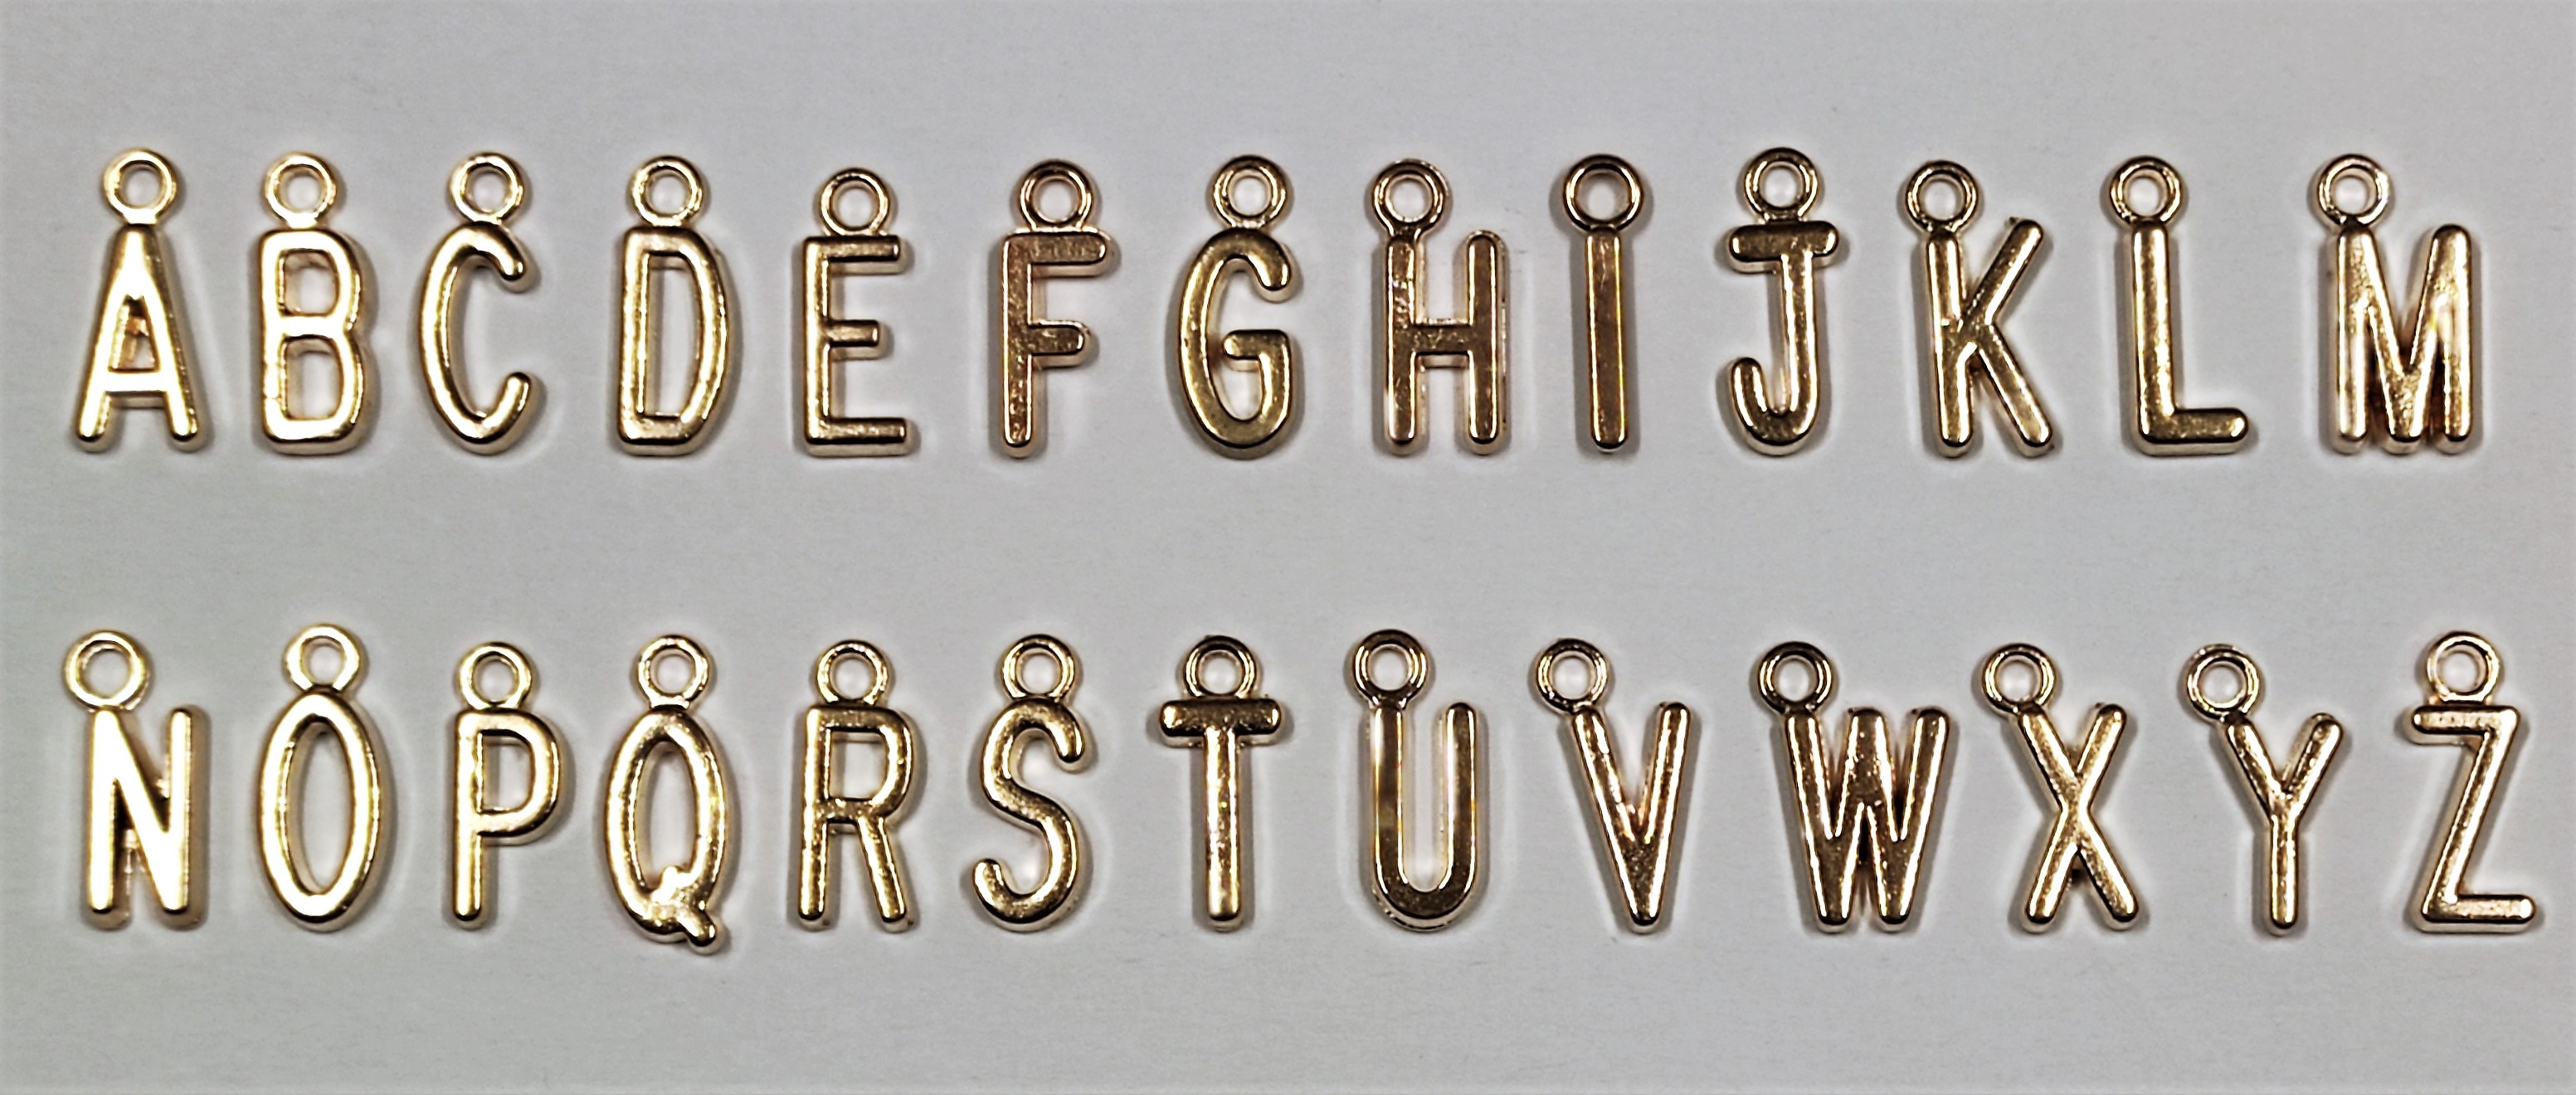  Hobby Horsing Deutschland - (ABC1) - Buchstaben-Set  A-Z aus Metall Farbe : bronze - ca. 1,3x1,3 cm